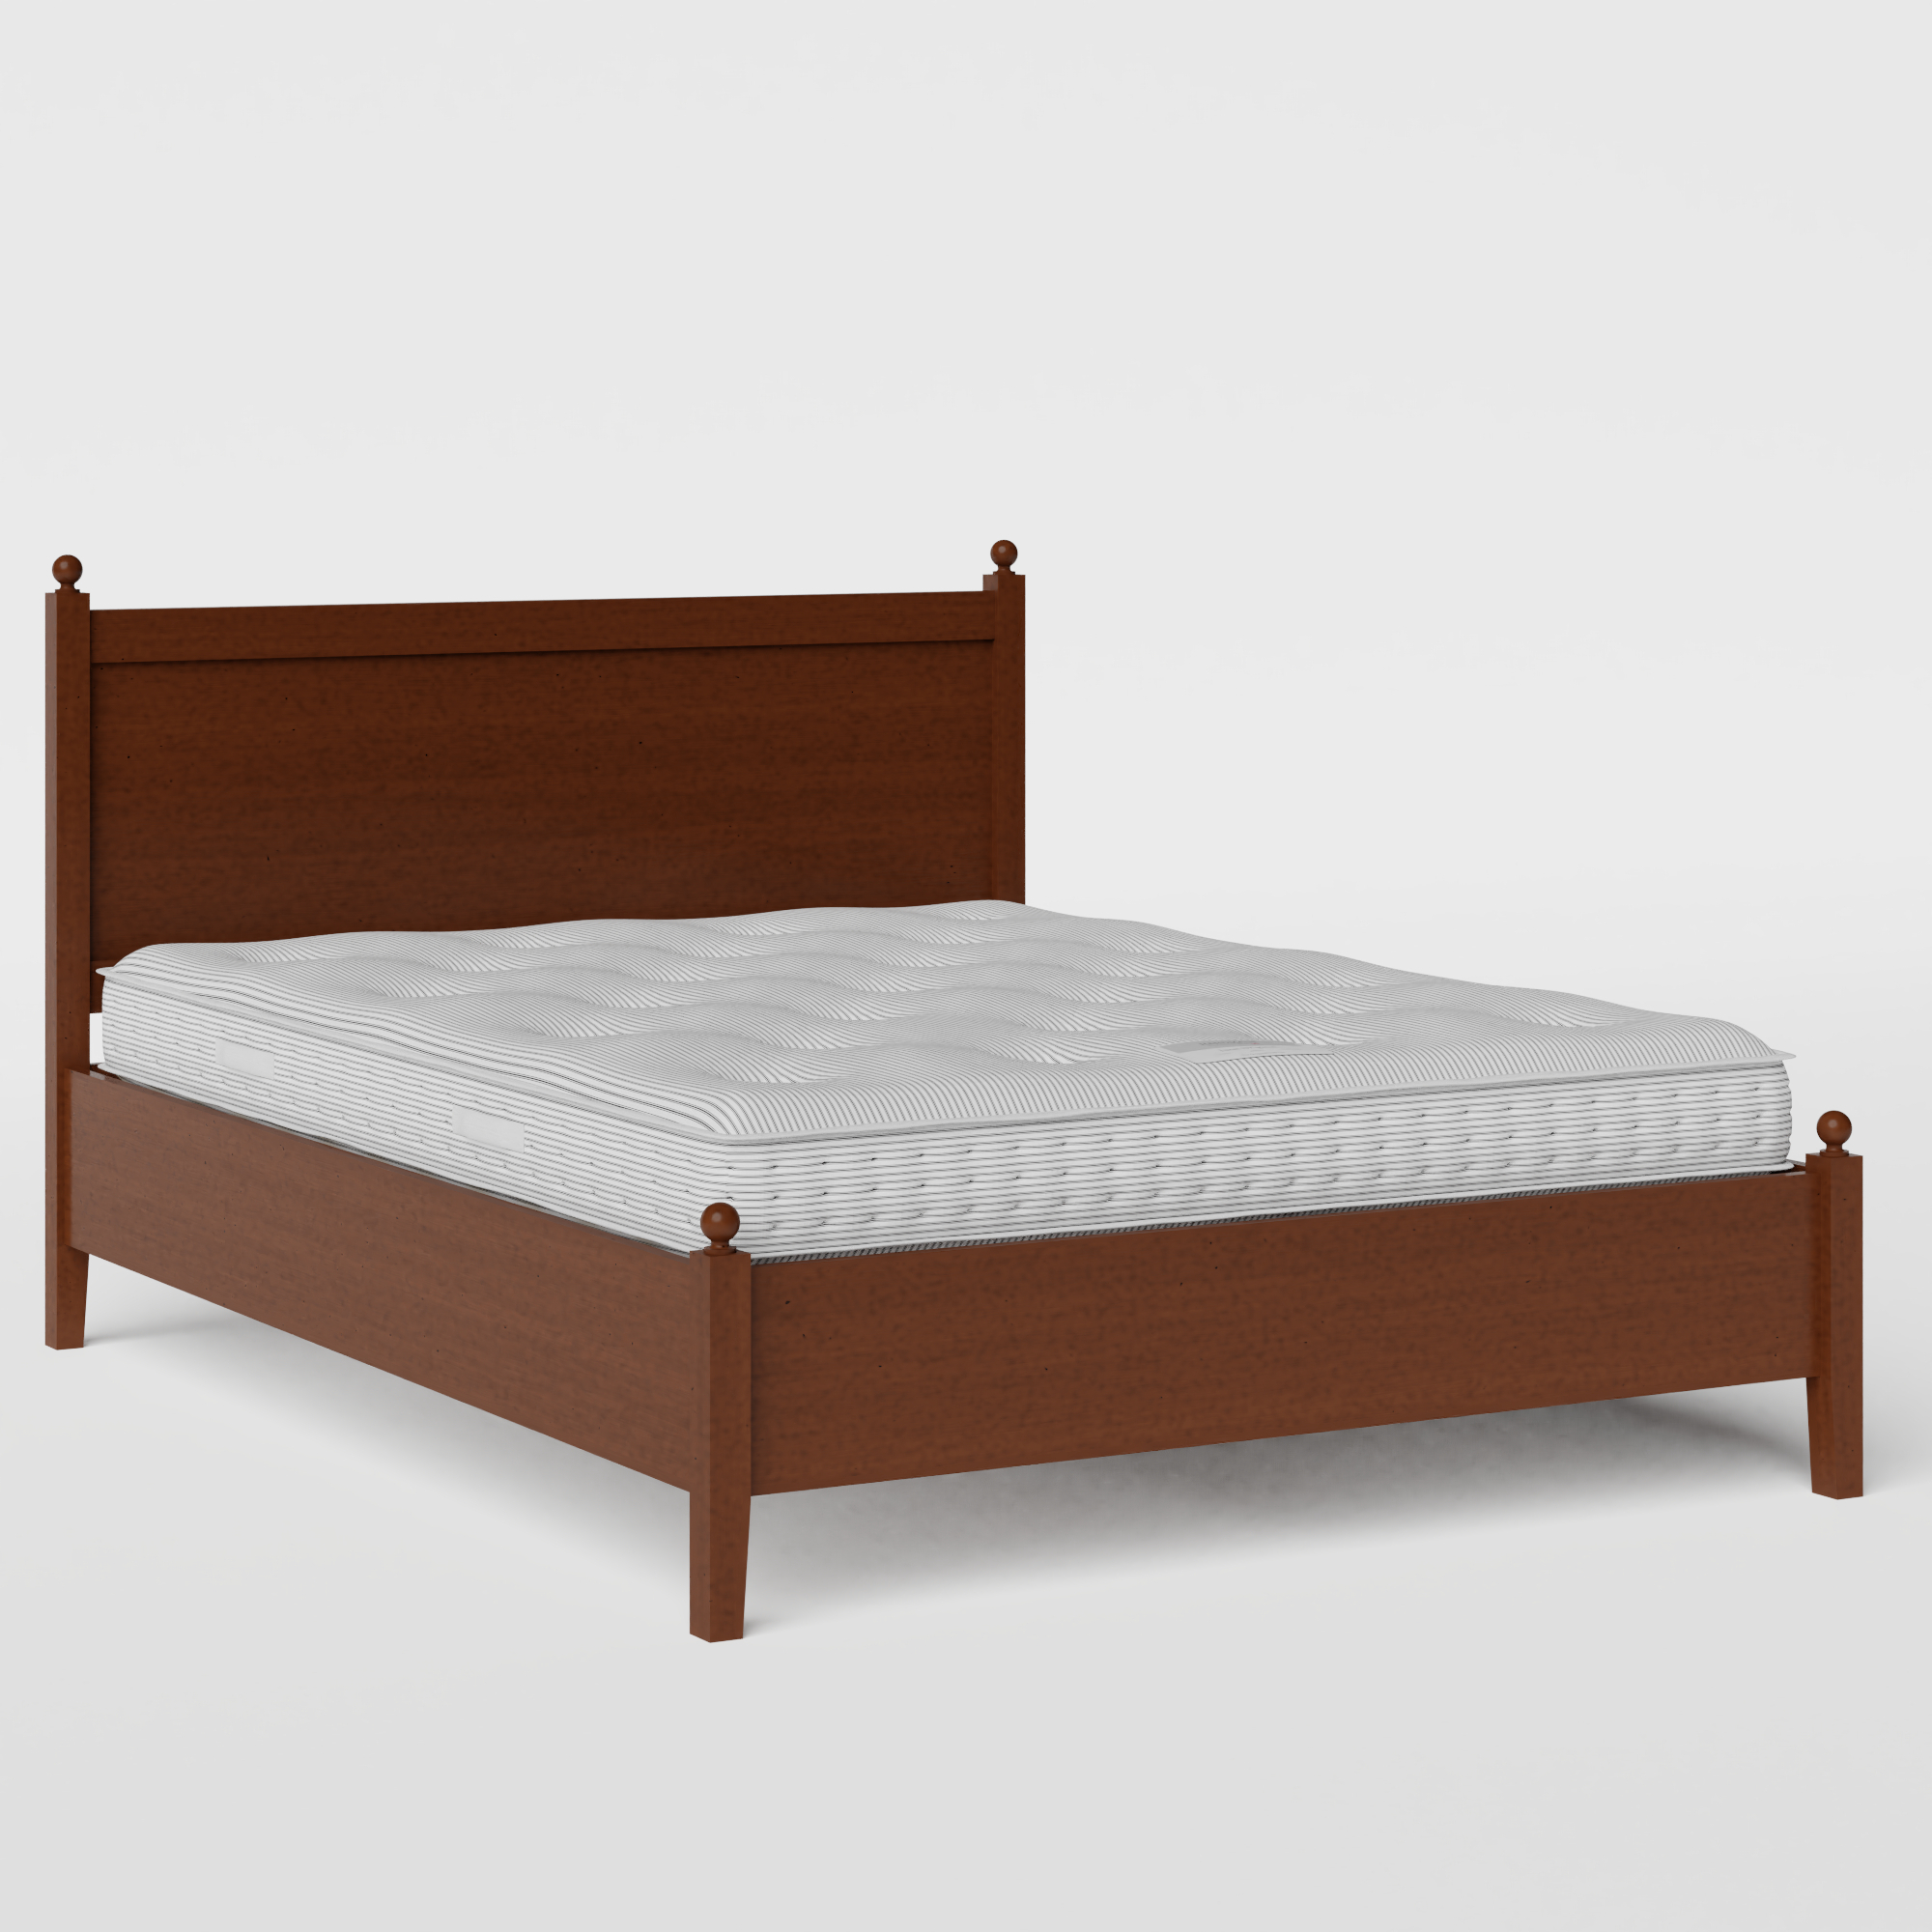 Marbella Low Footend wood bed in dark cherry with Juno mattress